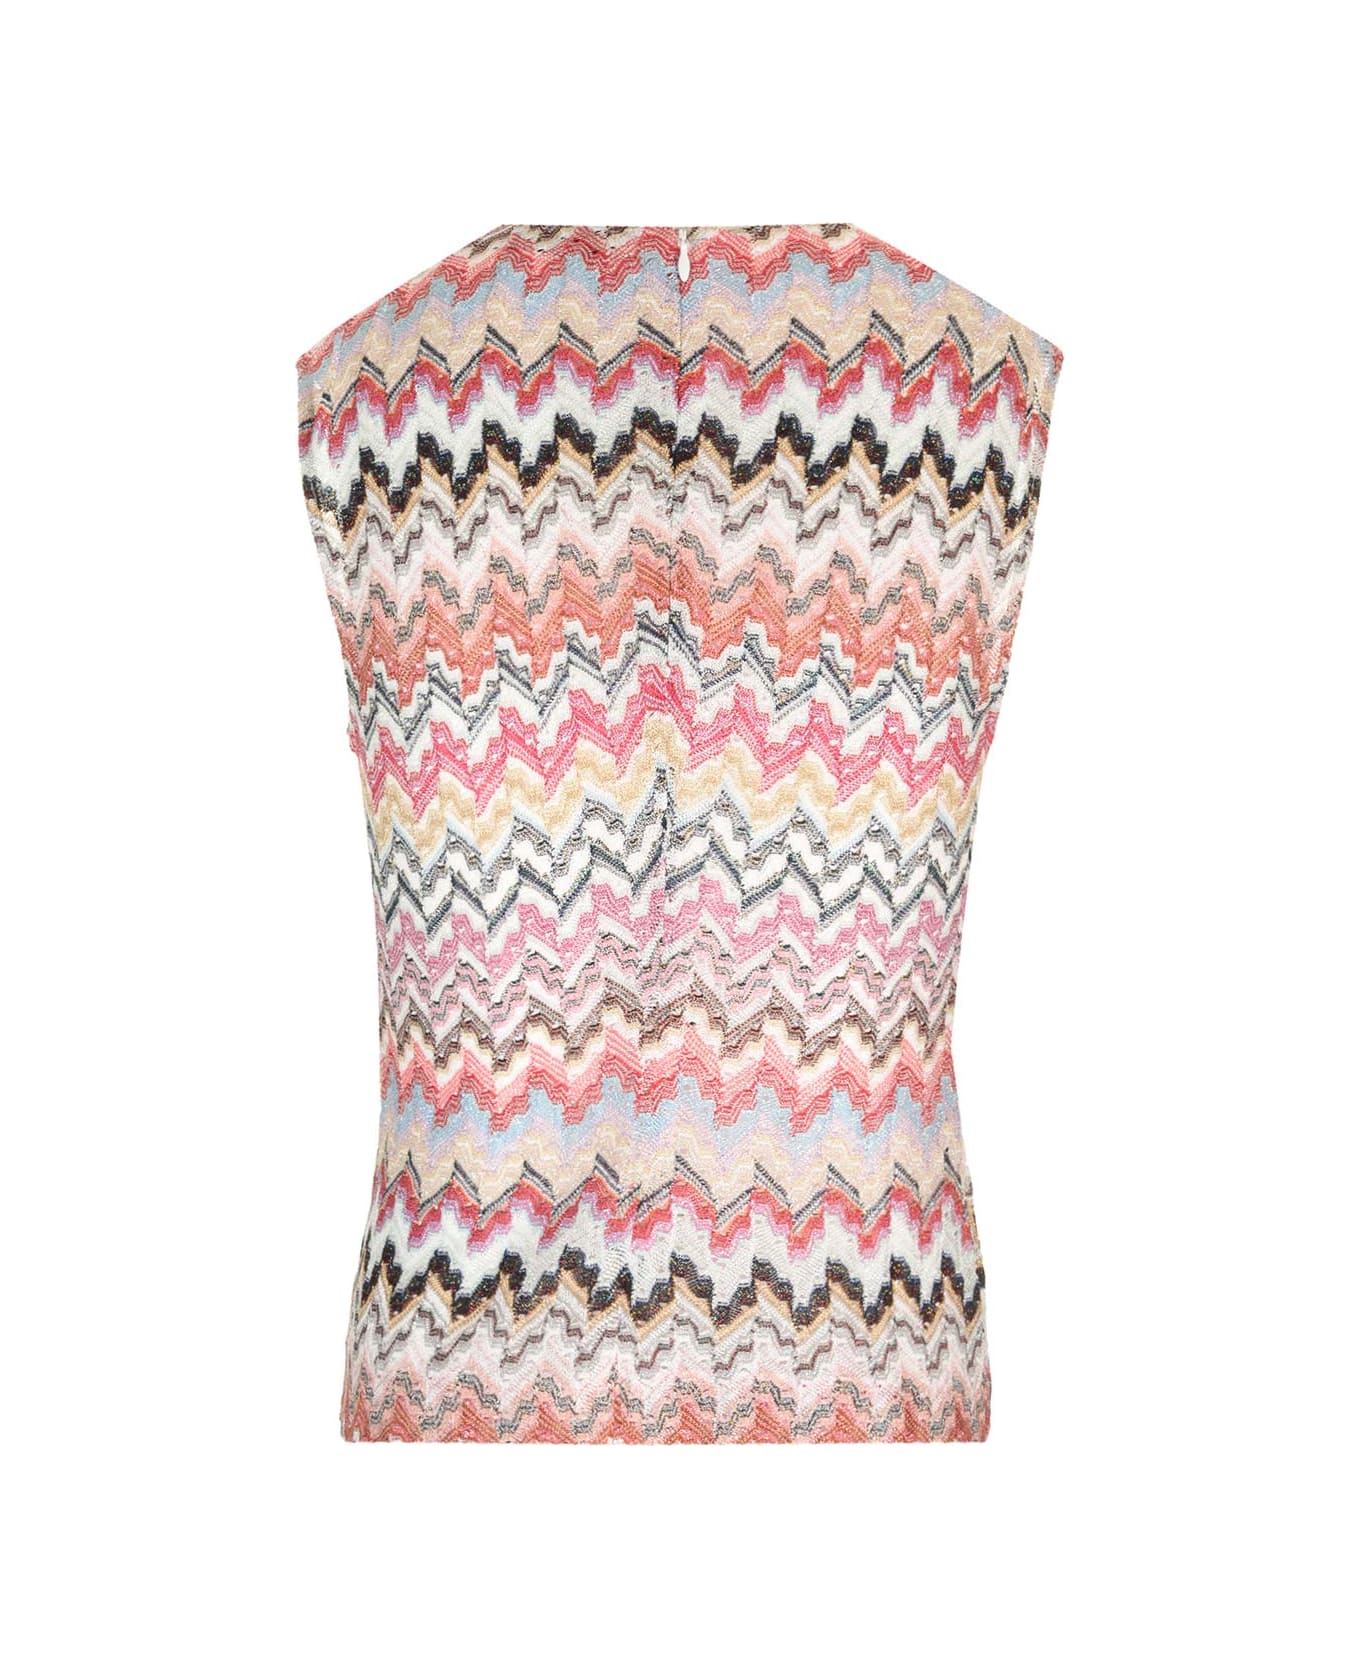 Missoni Viscose Knit Top - Pink/white